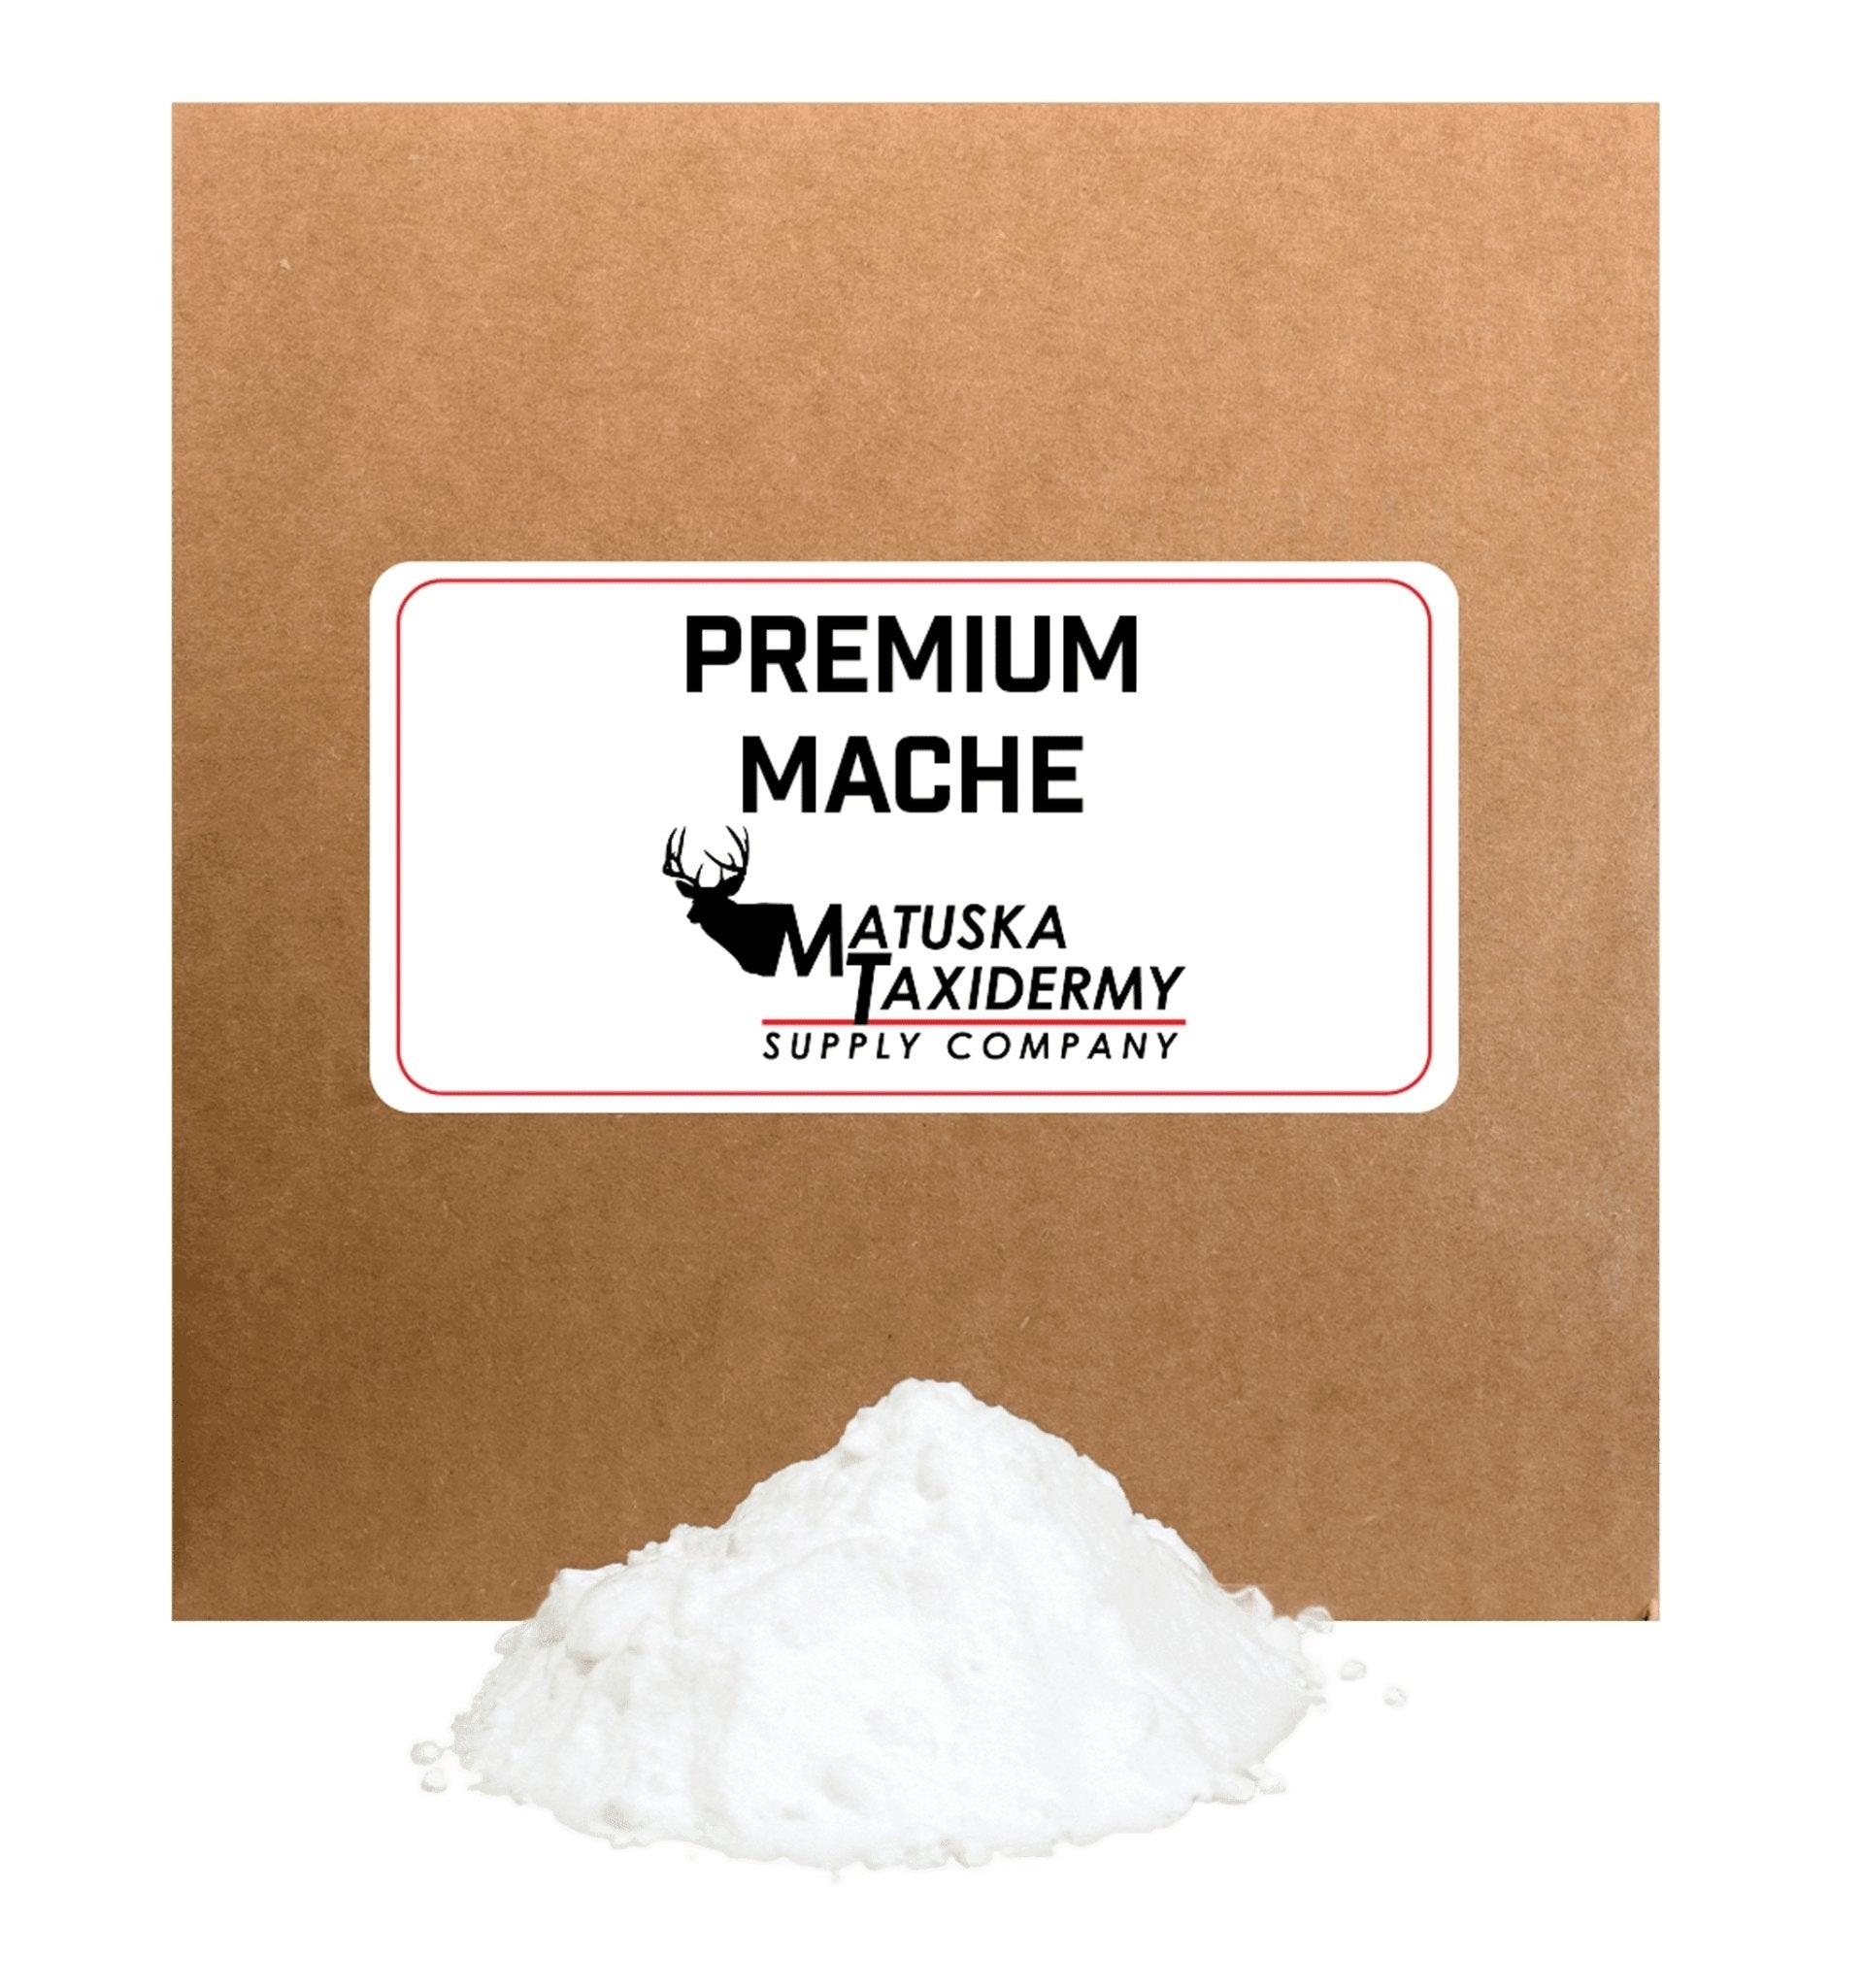 Mache (Premium) - Matuska Taxidermy Supply Company